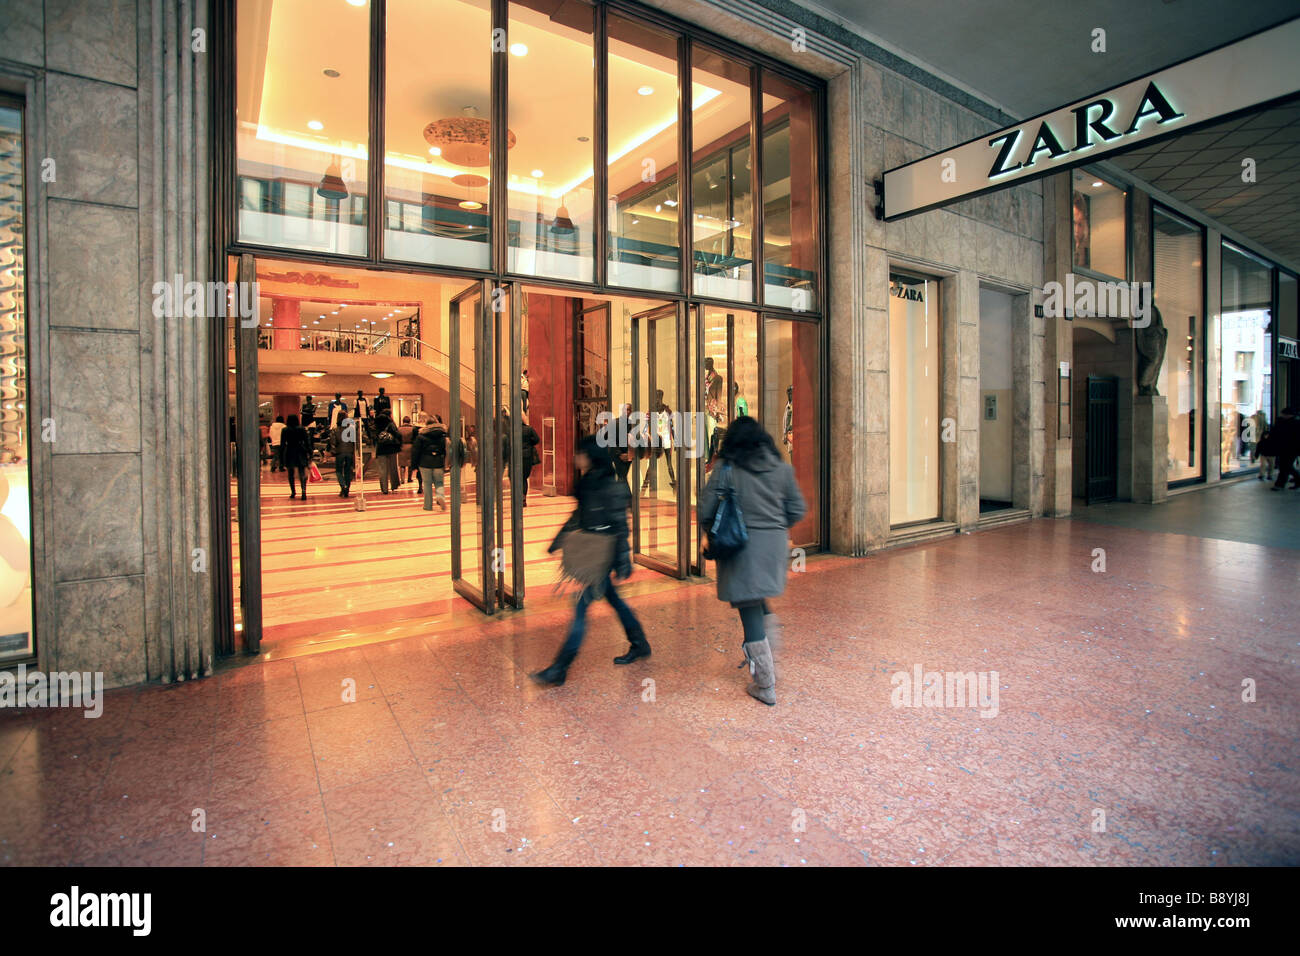 Zara Shop, Vittorio Emanuele II Straße, Mailand, Lombardei, Italien  Stockfotografie - Alamy